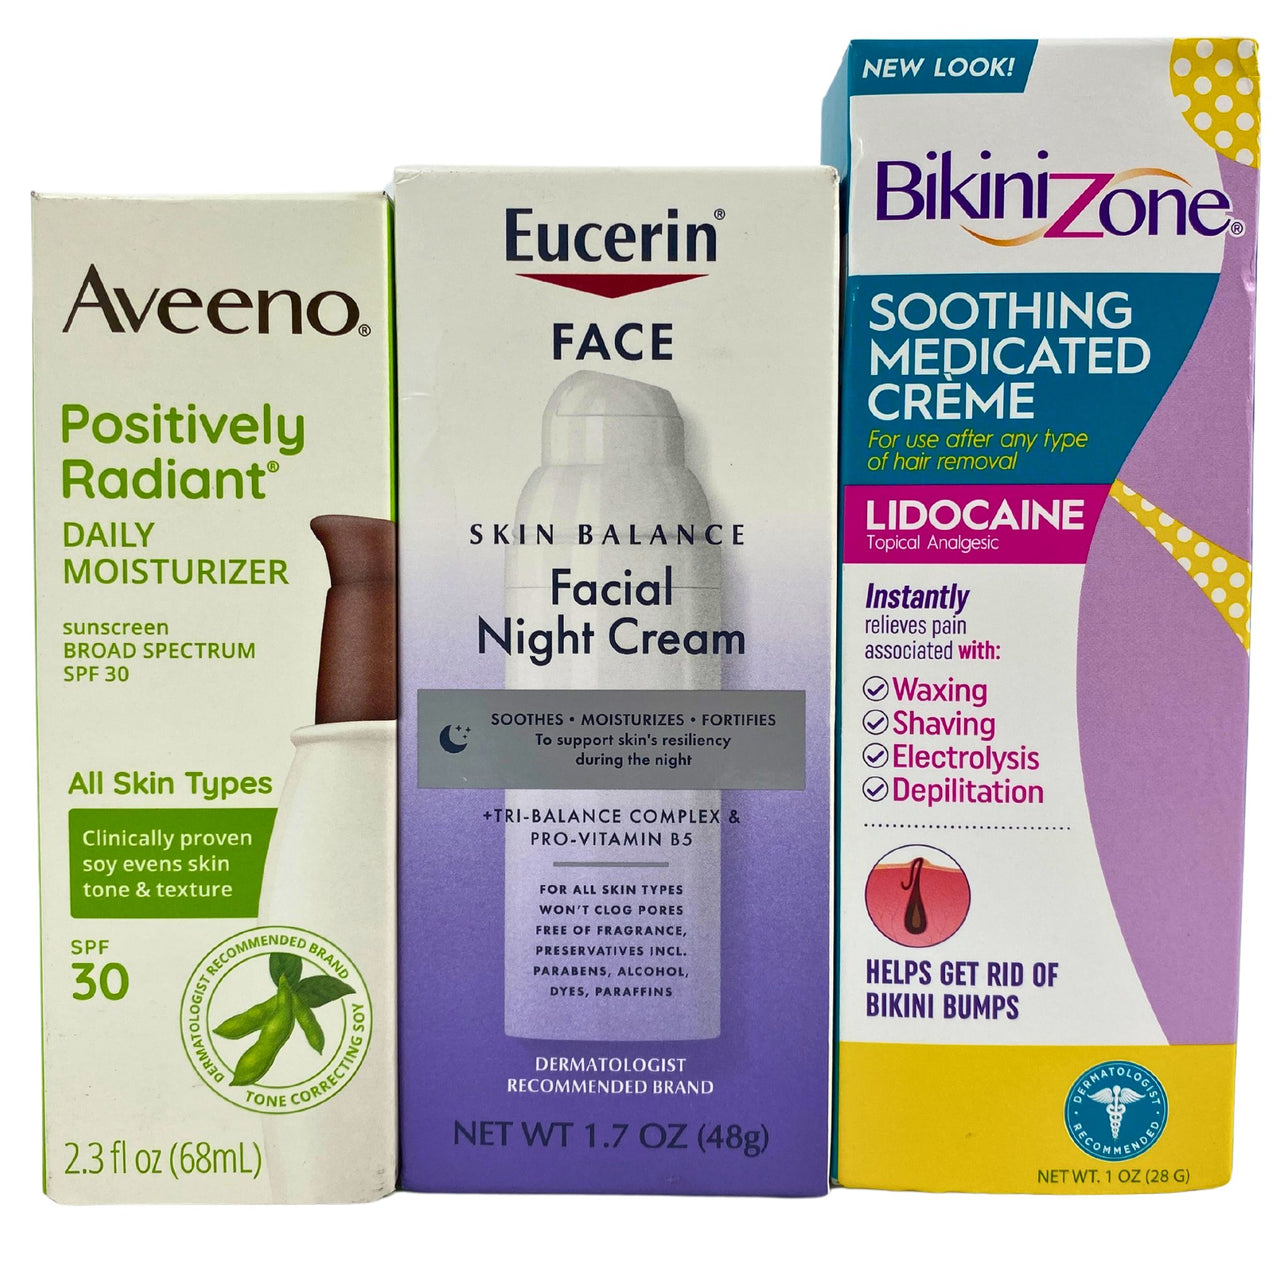 Eucerin , Bikini Zone & Aveeno Assorted Mix